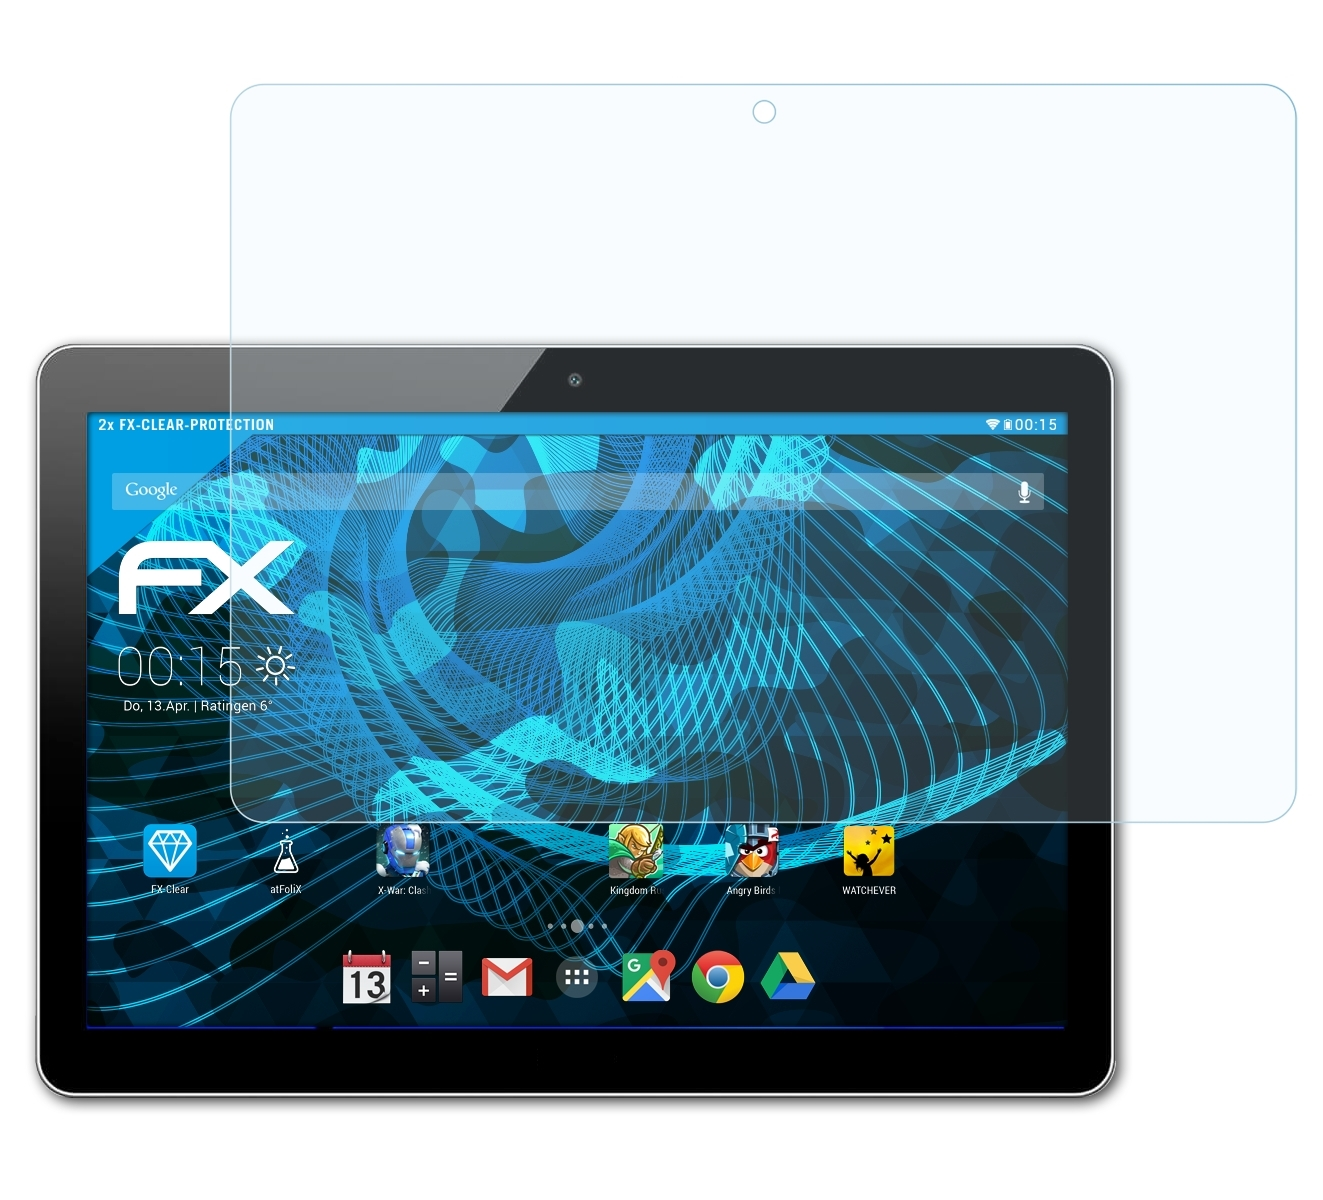 ATFOLIX 2x Huawei Play Pad 2 Displayschutz(für FX-Clear 9.6)